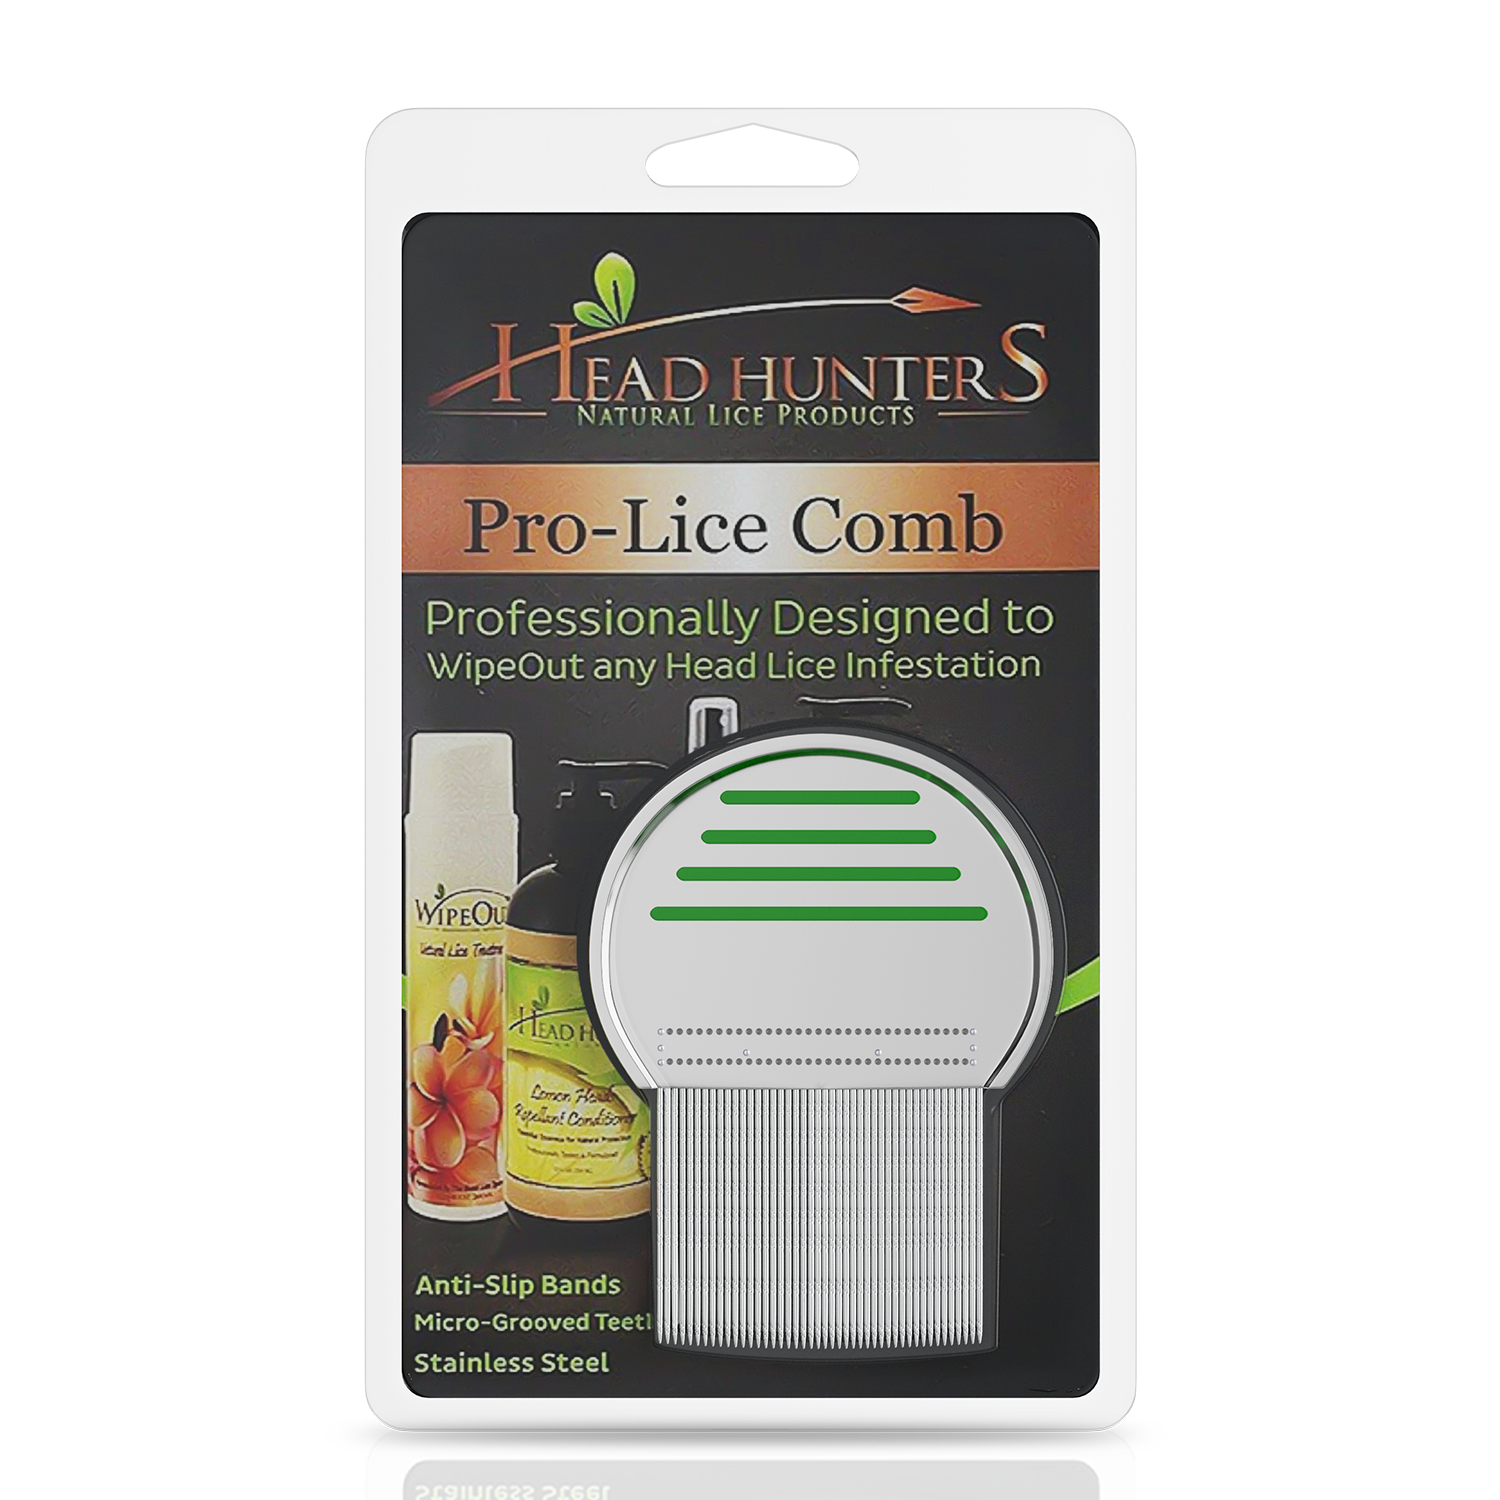 Pro-Lice Comb